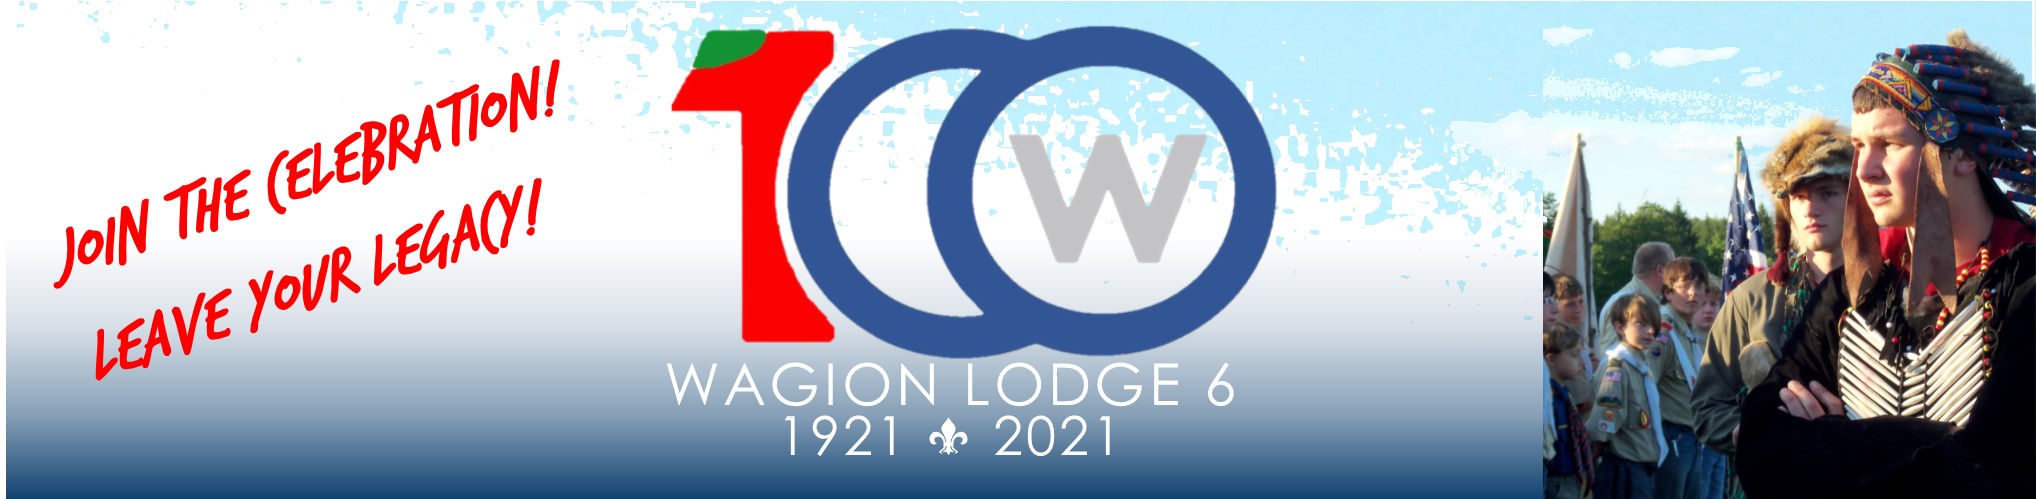 Wagion Lodge #6